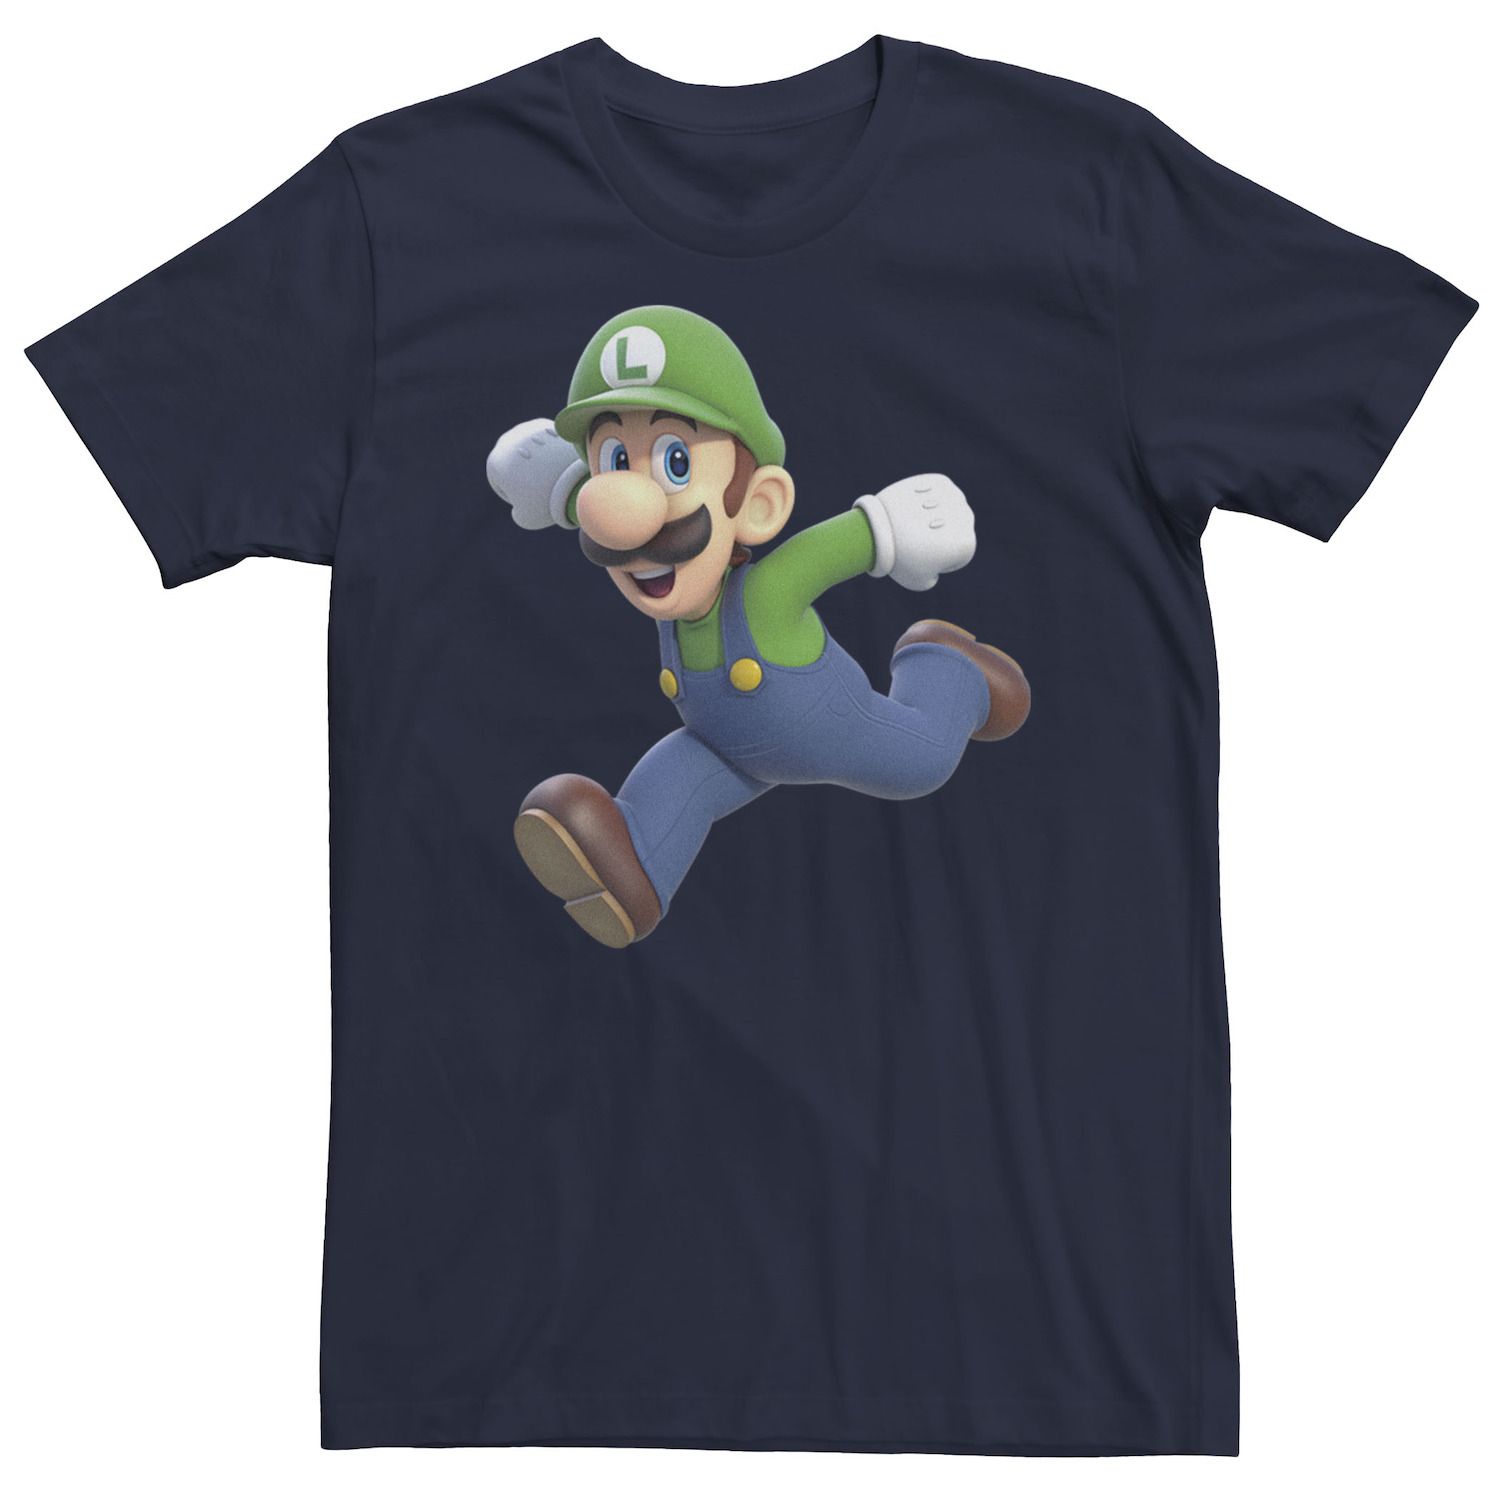 Мужская футболка с портретом Nintendo Luigi Licensed Character фото